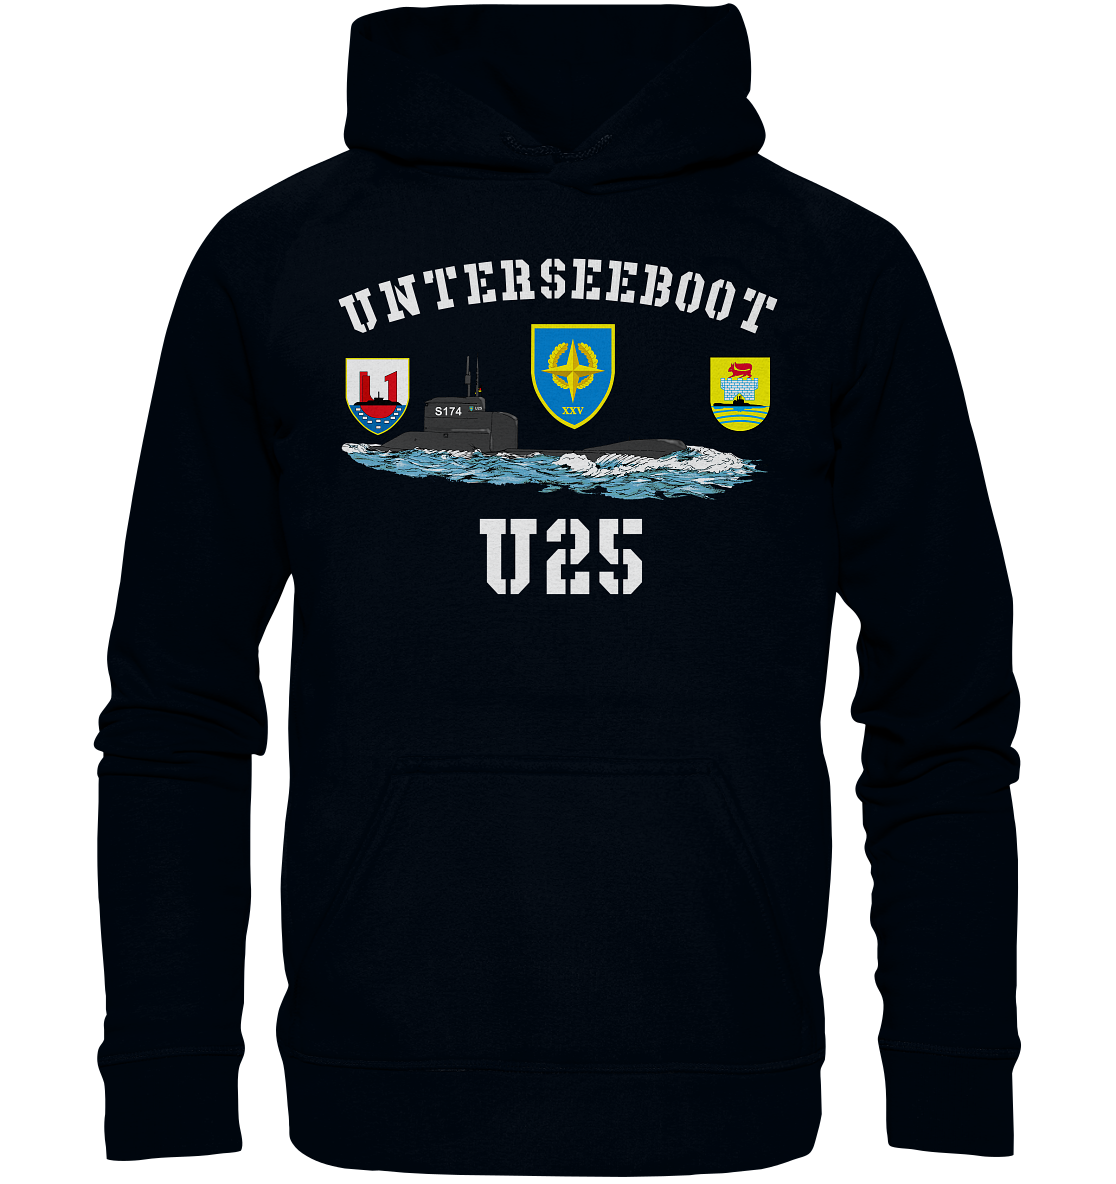 Unterseeboot U25 - Basic Unisex Hoodie